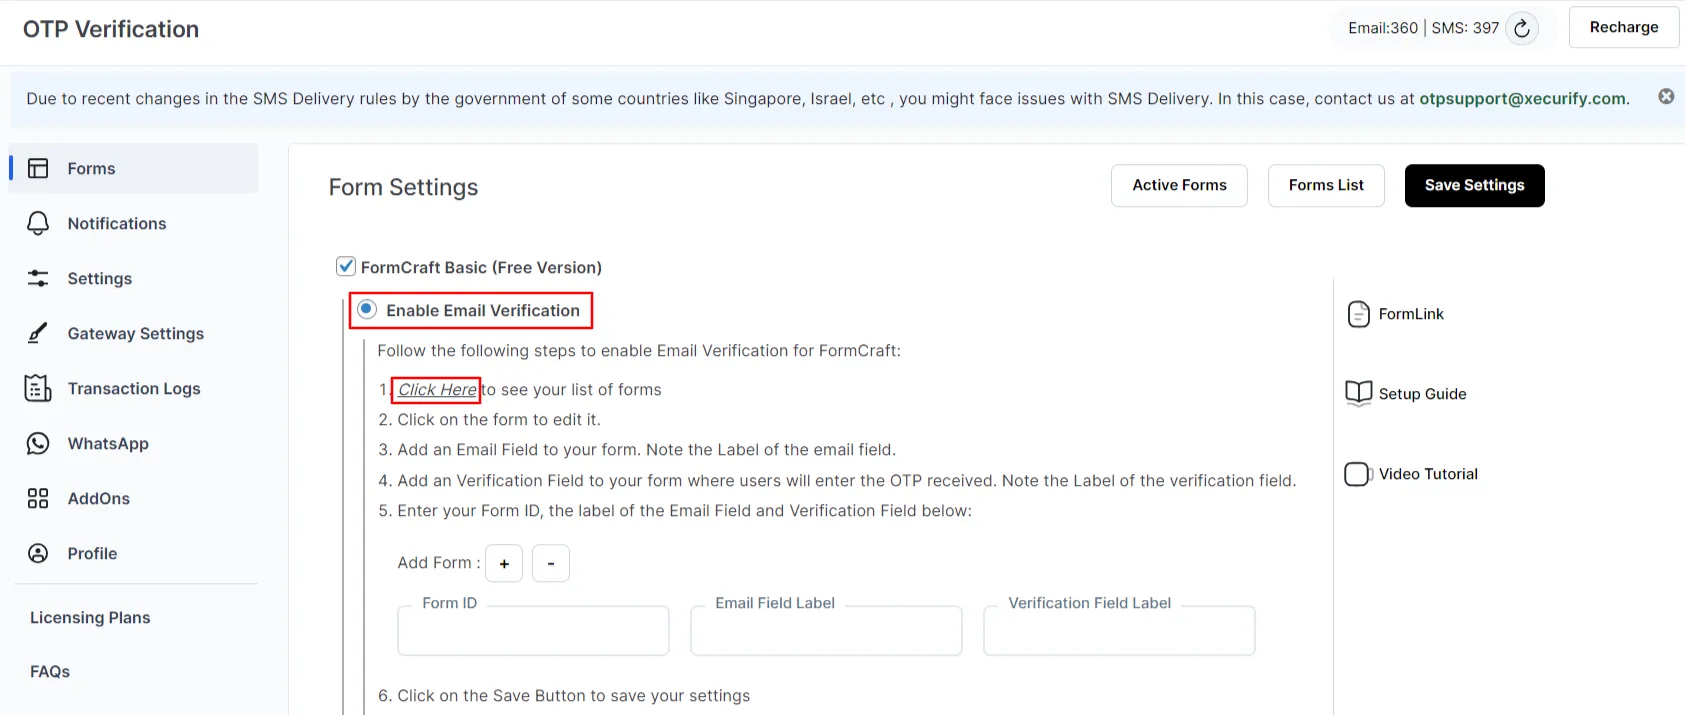 Free otp verification formcraft basic - Enable email verification